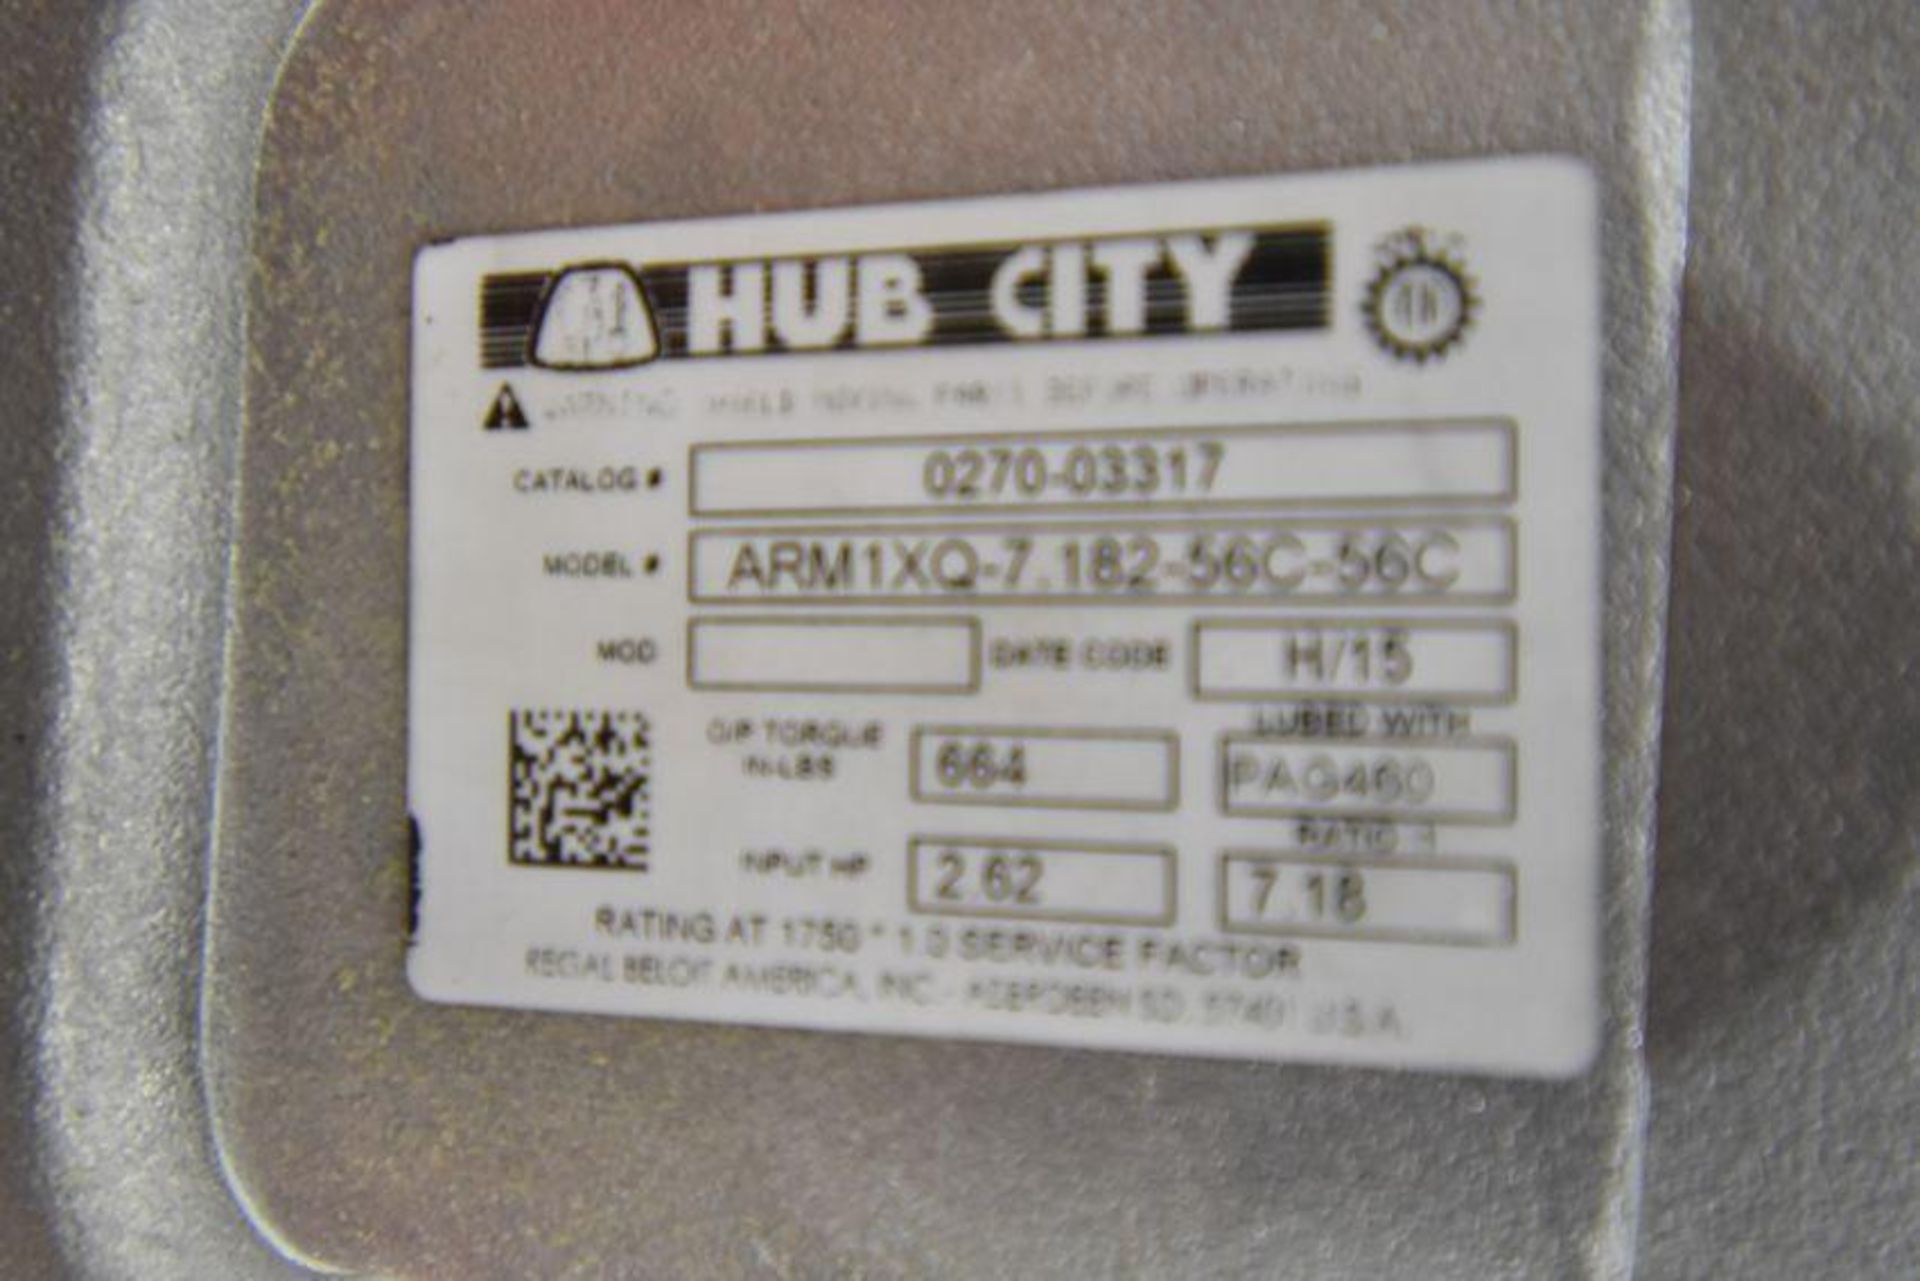 MOTOR: Hub City Model arm IXQ-7.812- - Image 4 of 4